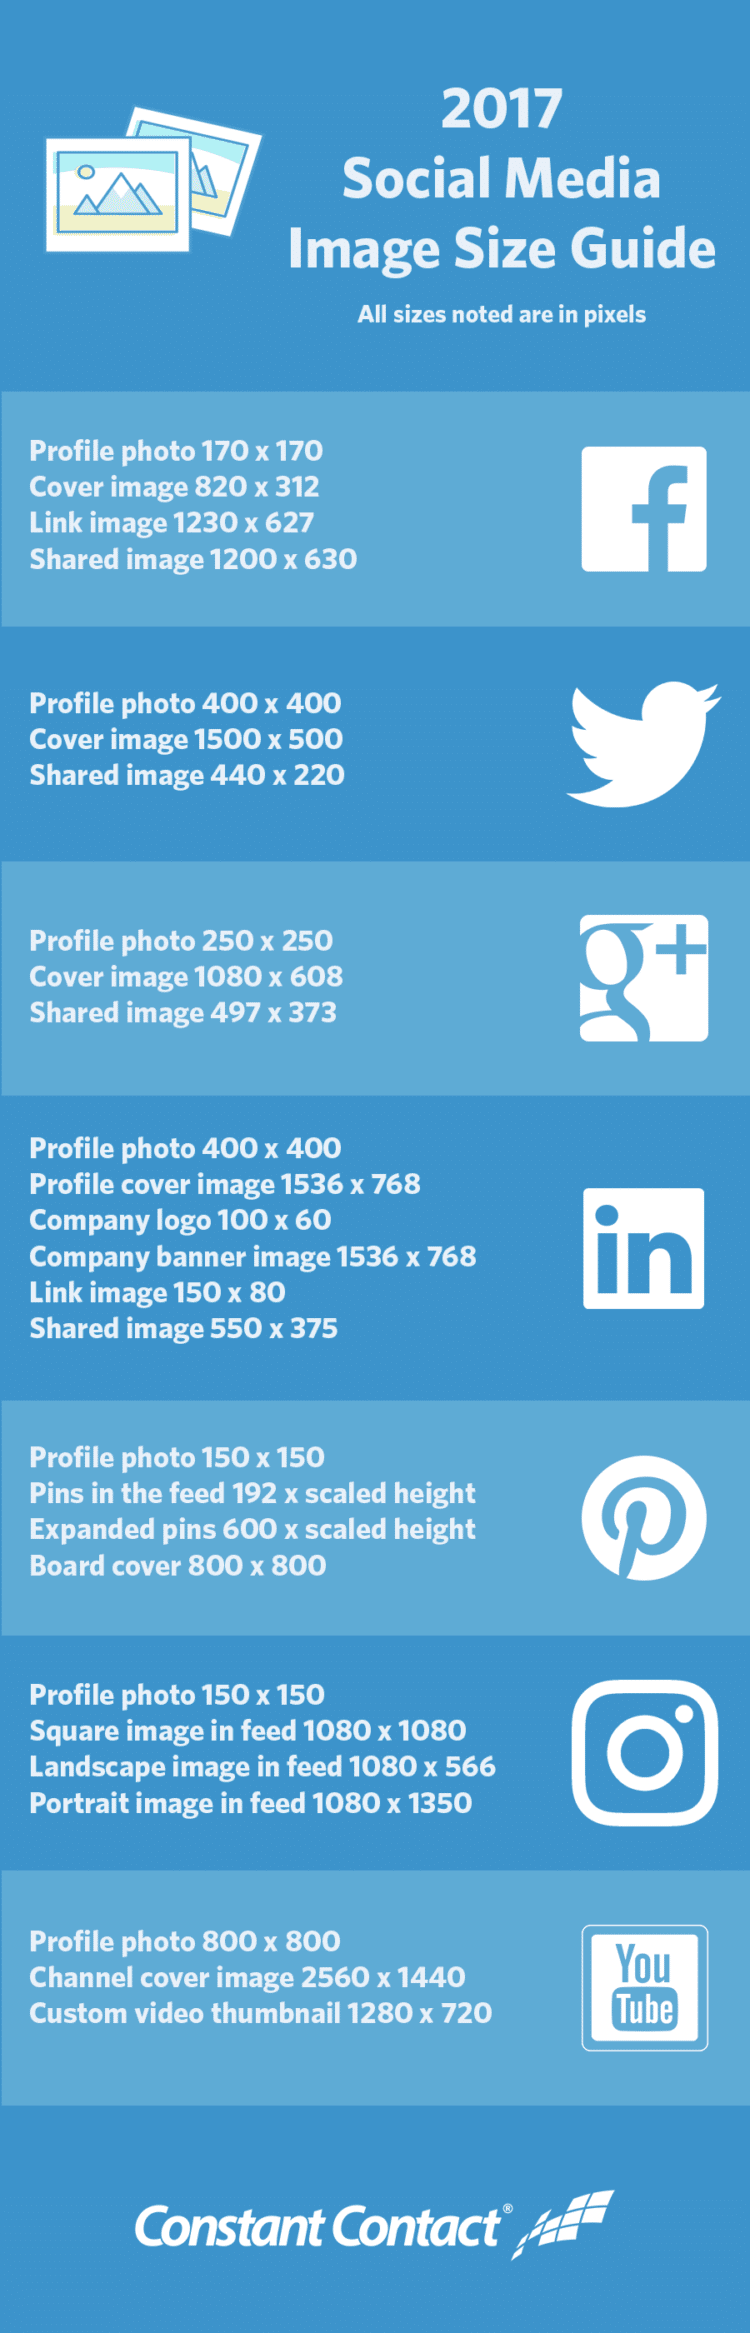 Social Media Image Sizes Guide 2017